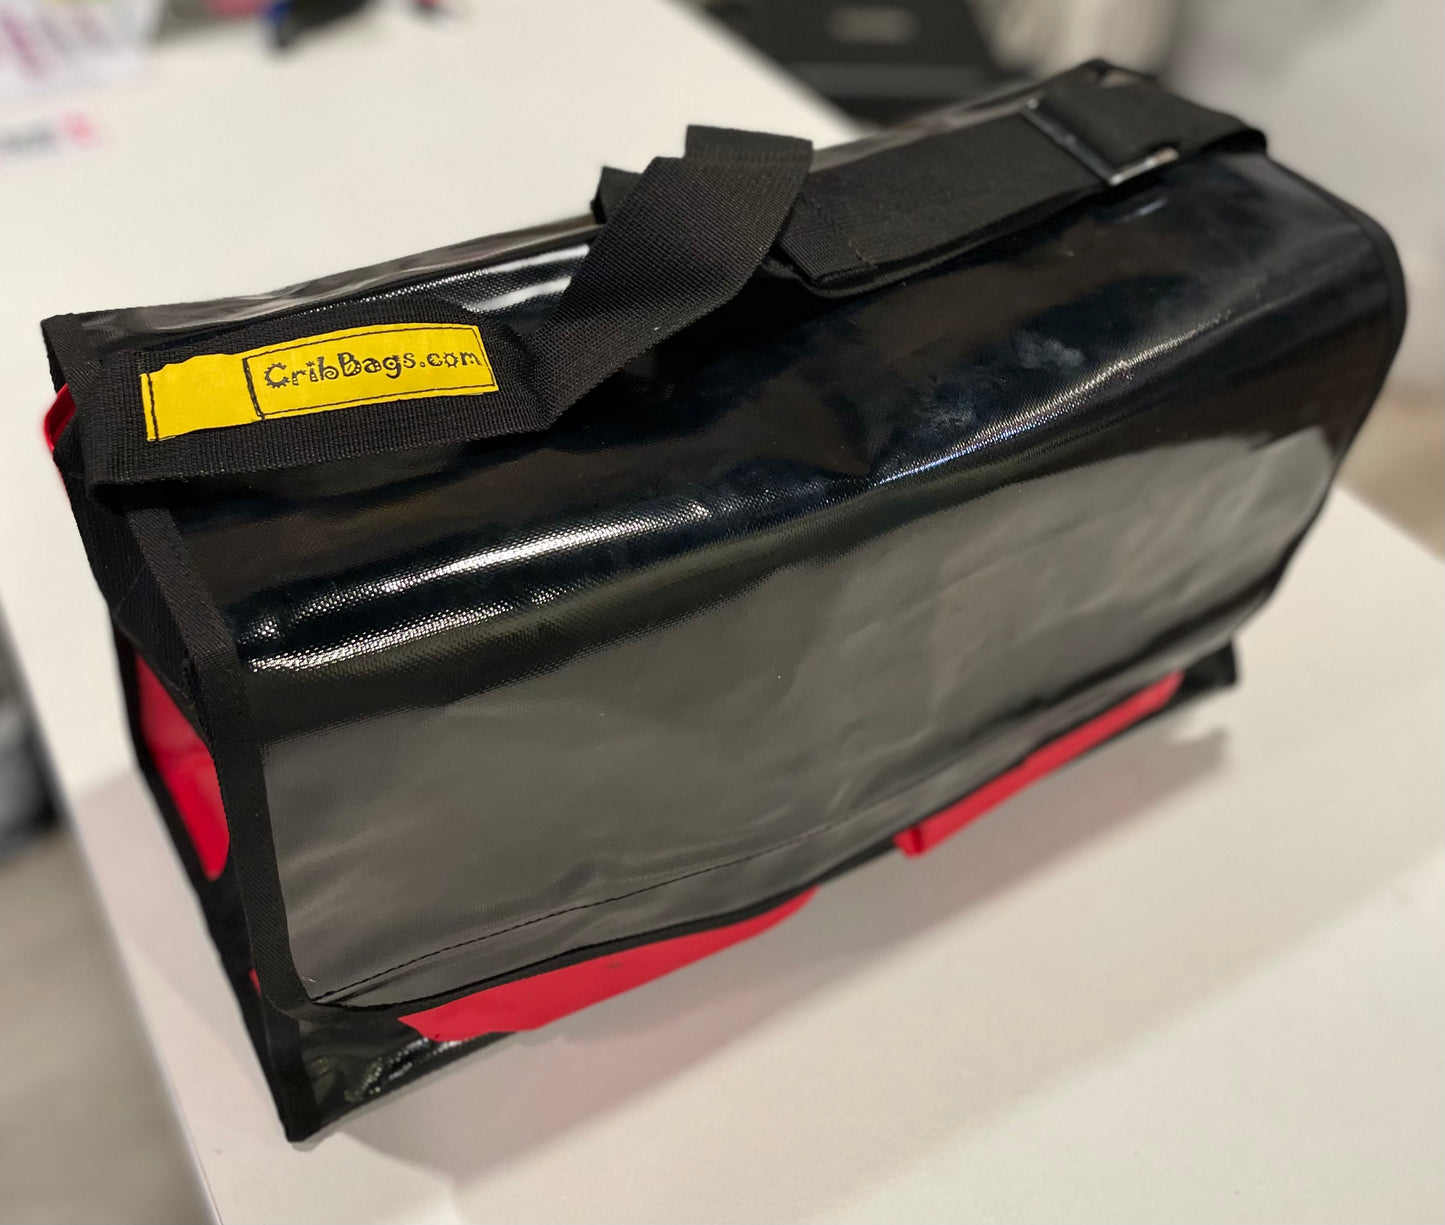 CribBags Medium Black and Red Crib bag. Tough Vinyl Construct 2 pockets outside, Document pockets inside